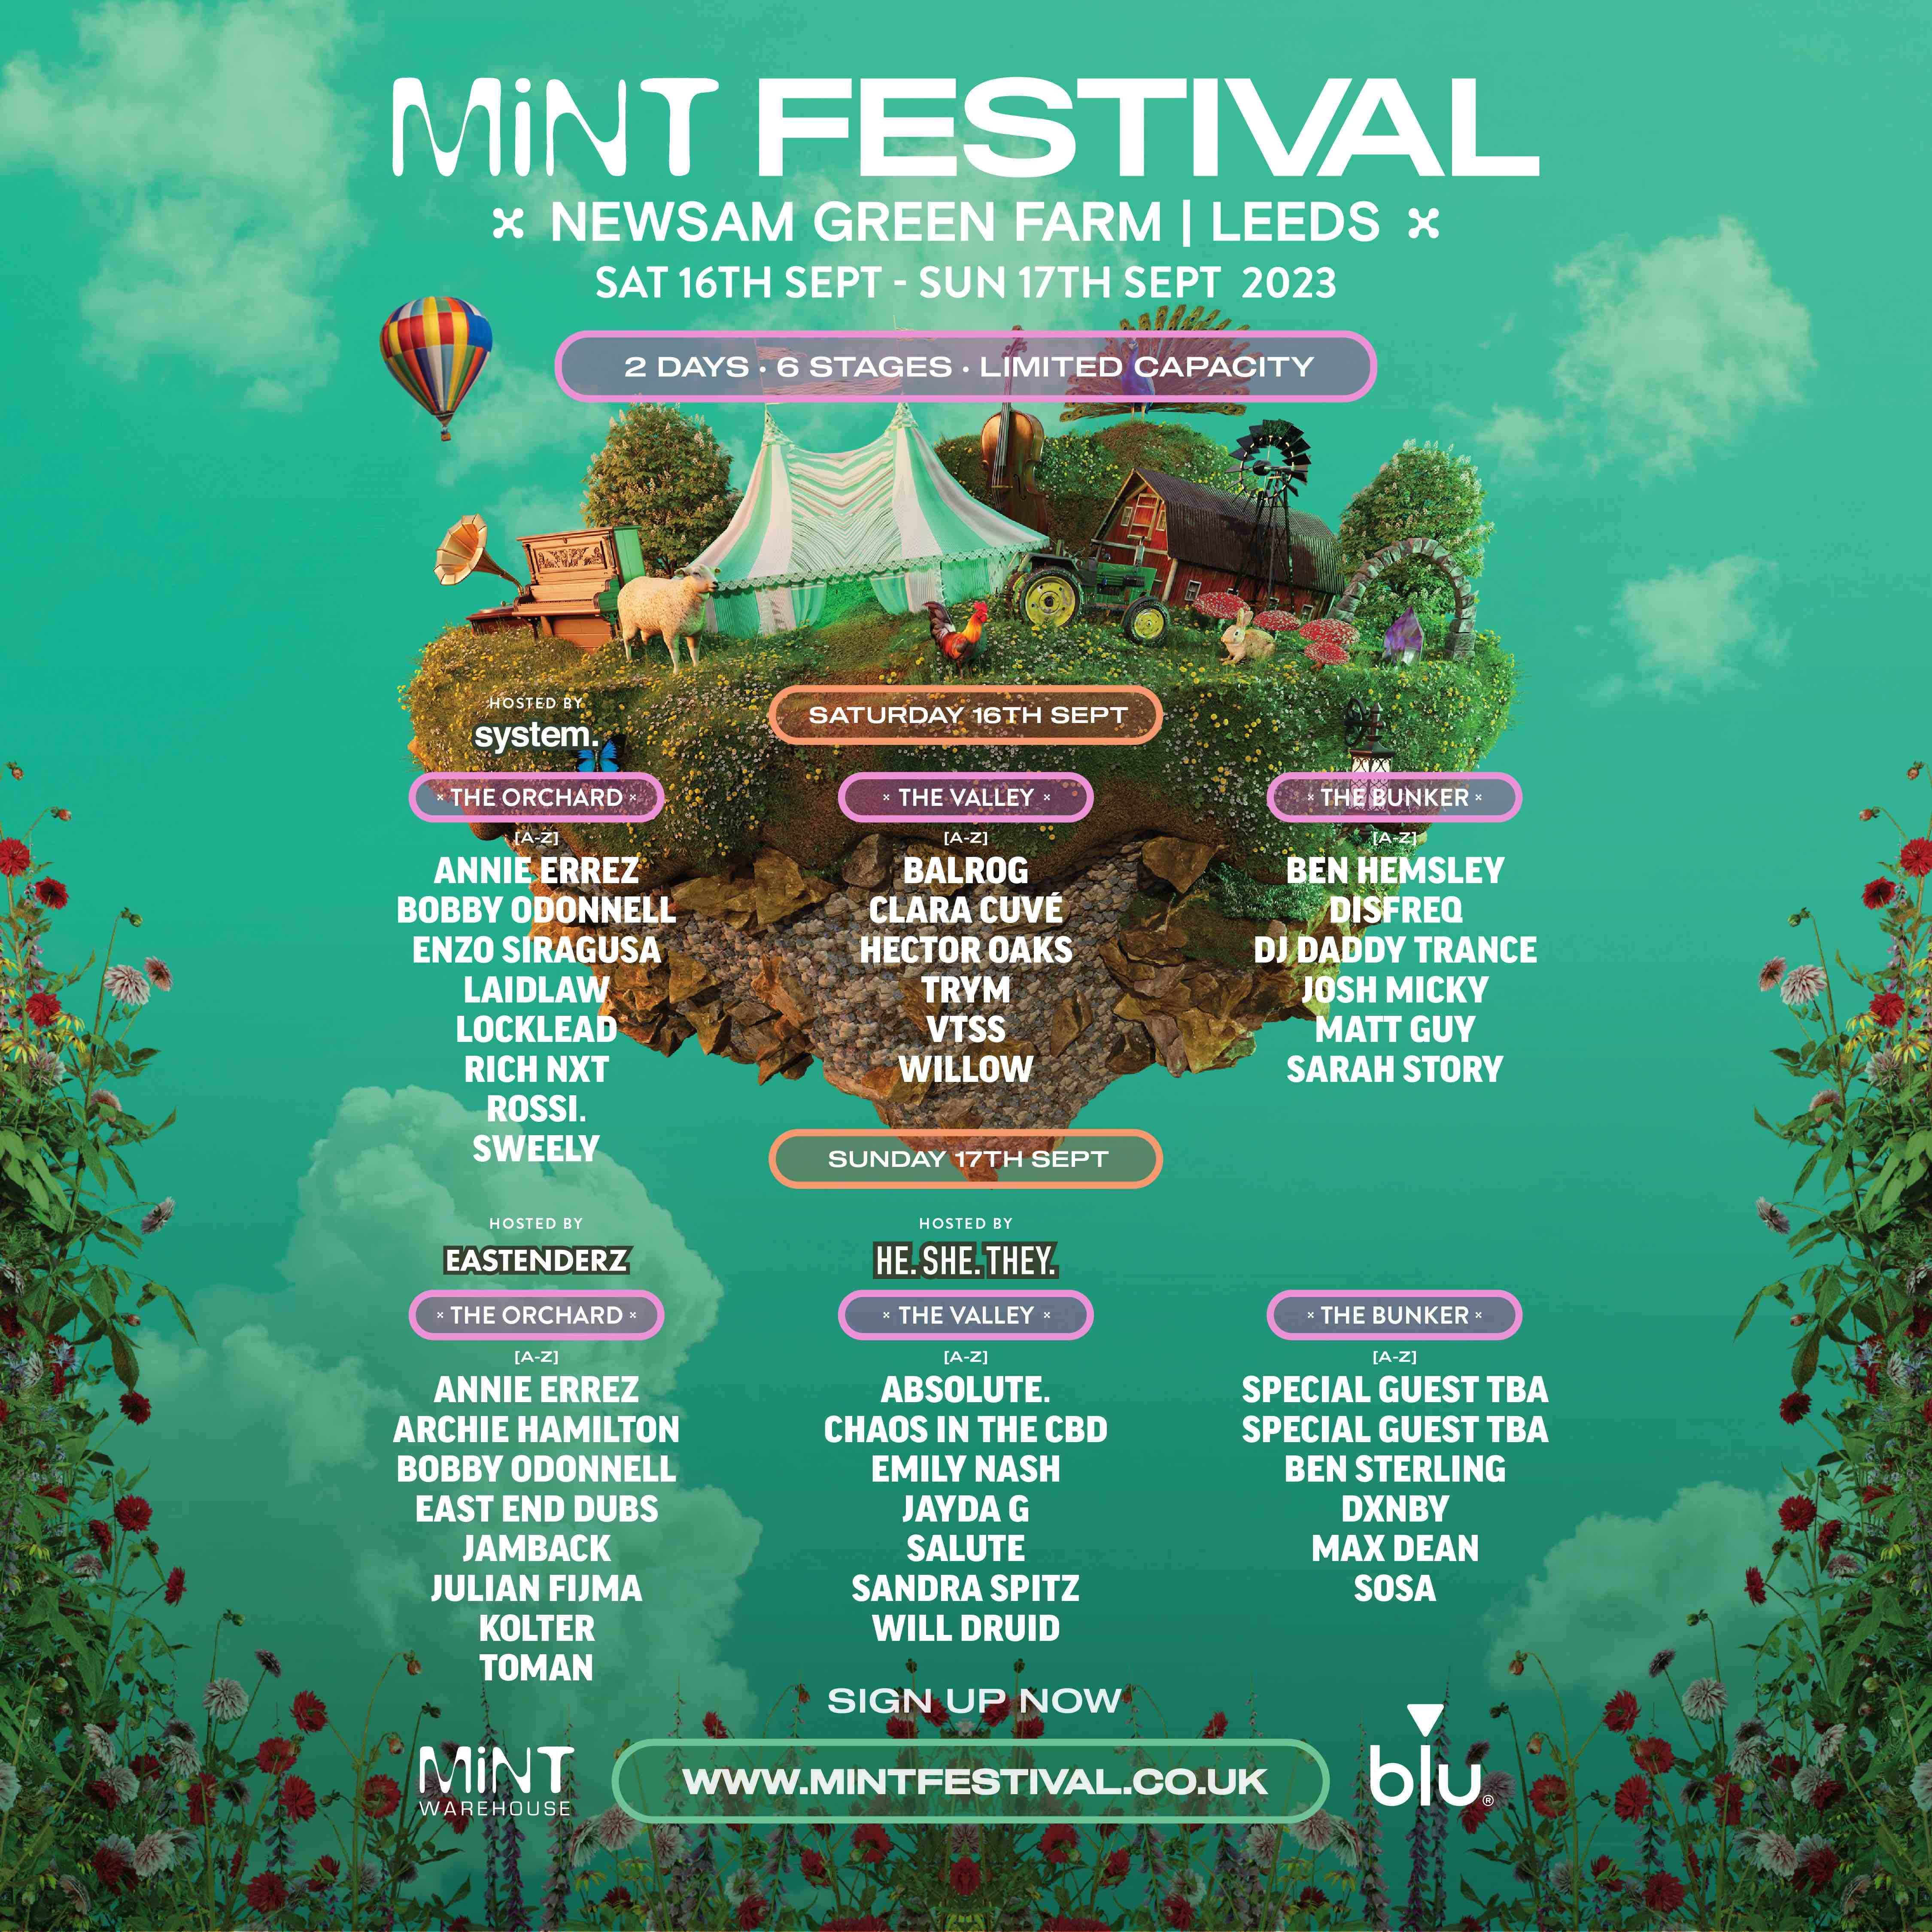 Mint Festival 2023 at Newsam Green Farm, Leeds